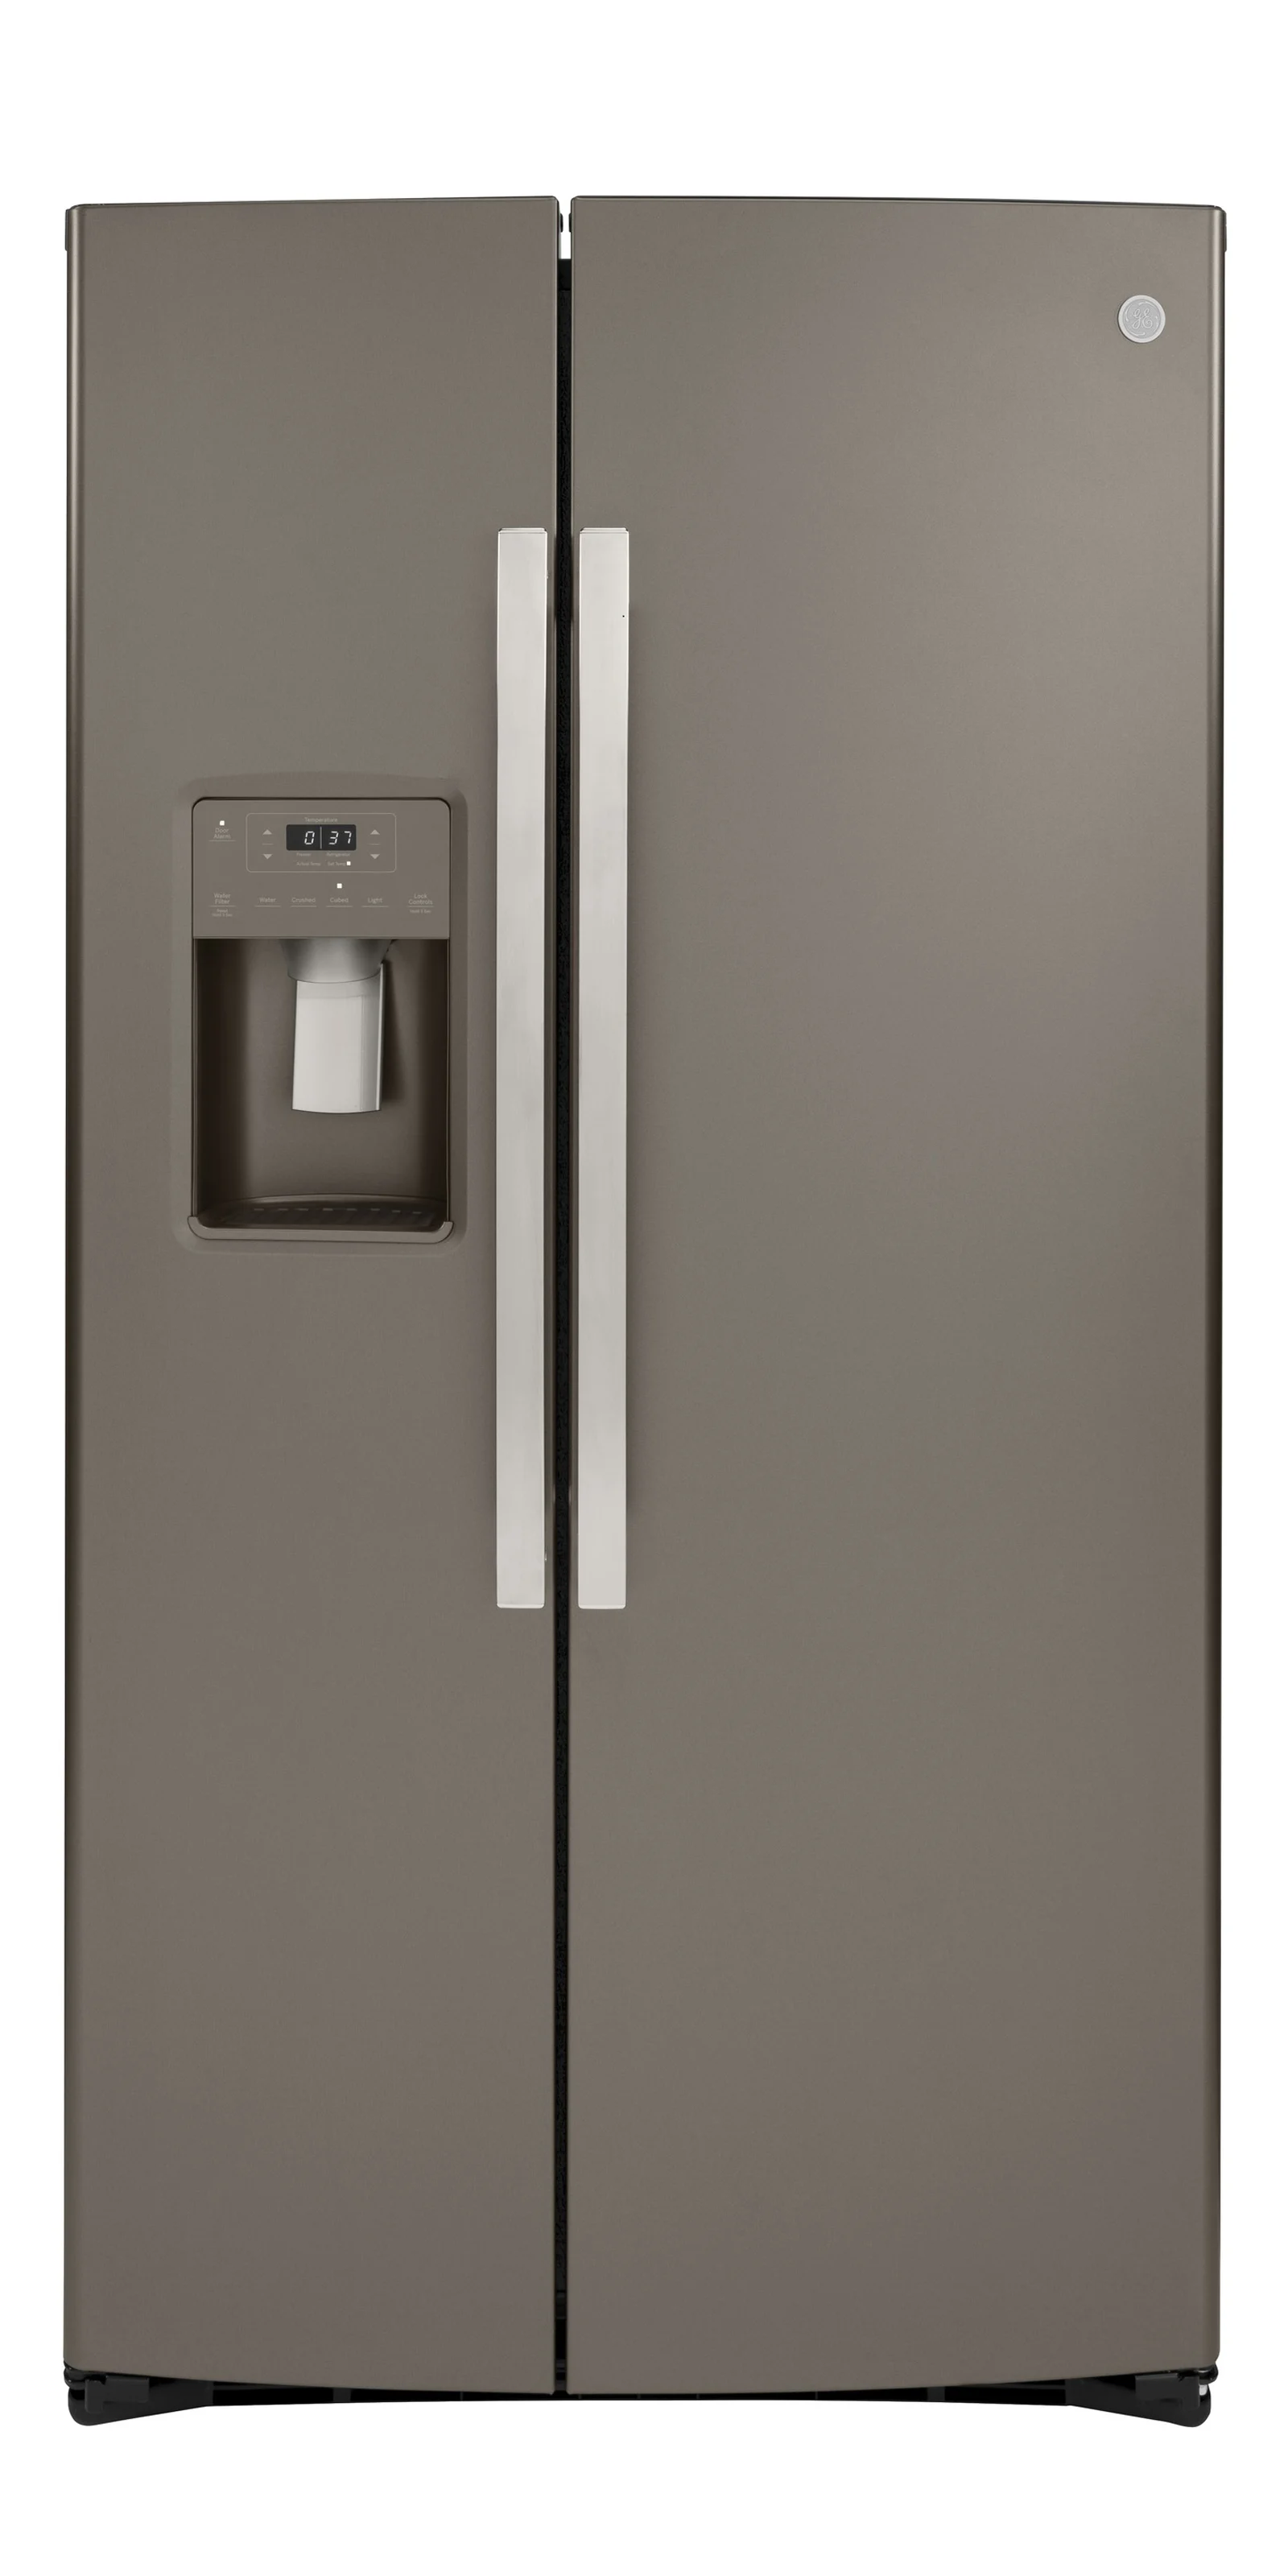 A side-by-side Refrigerator